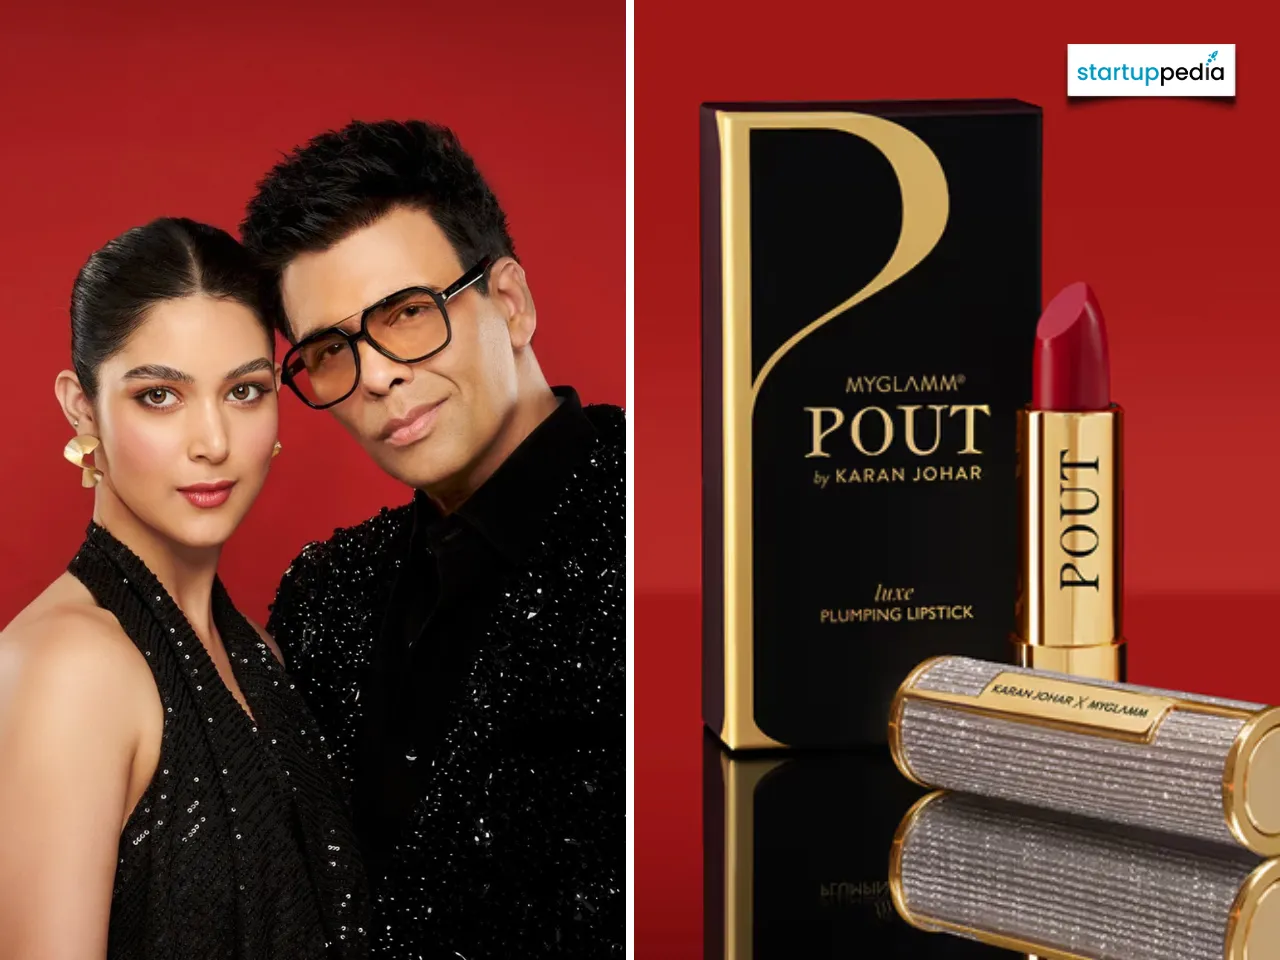 Blinkit signs Karan Johar’s new lipsticks for perfect pouts in 10 min